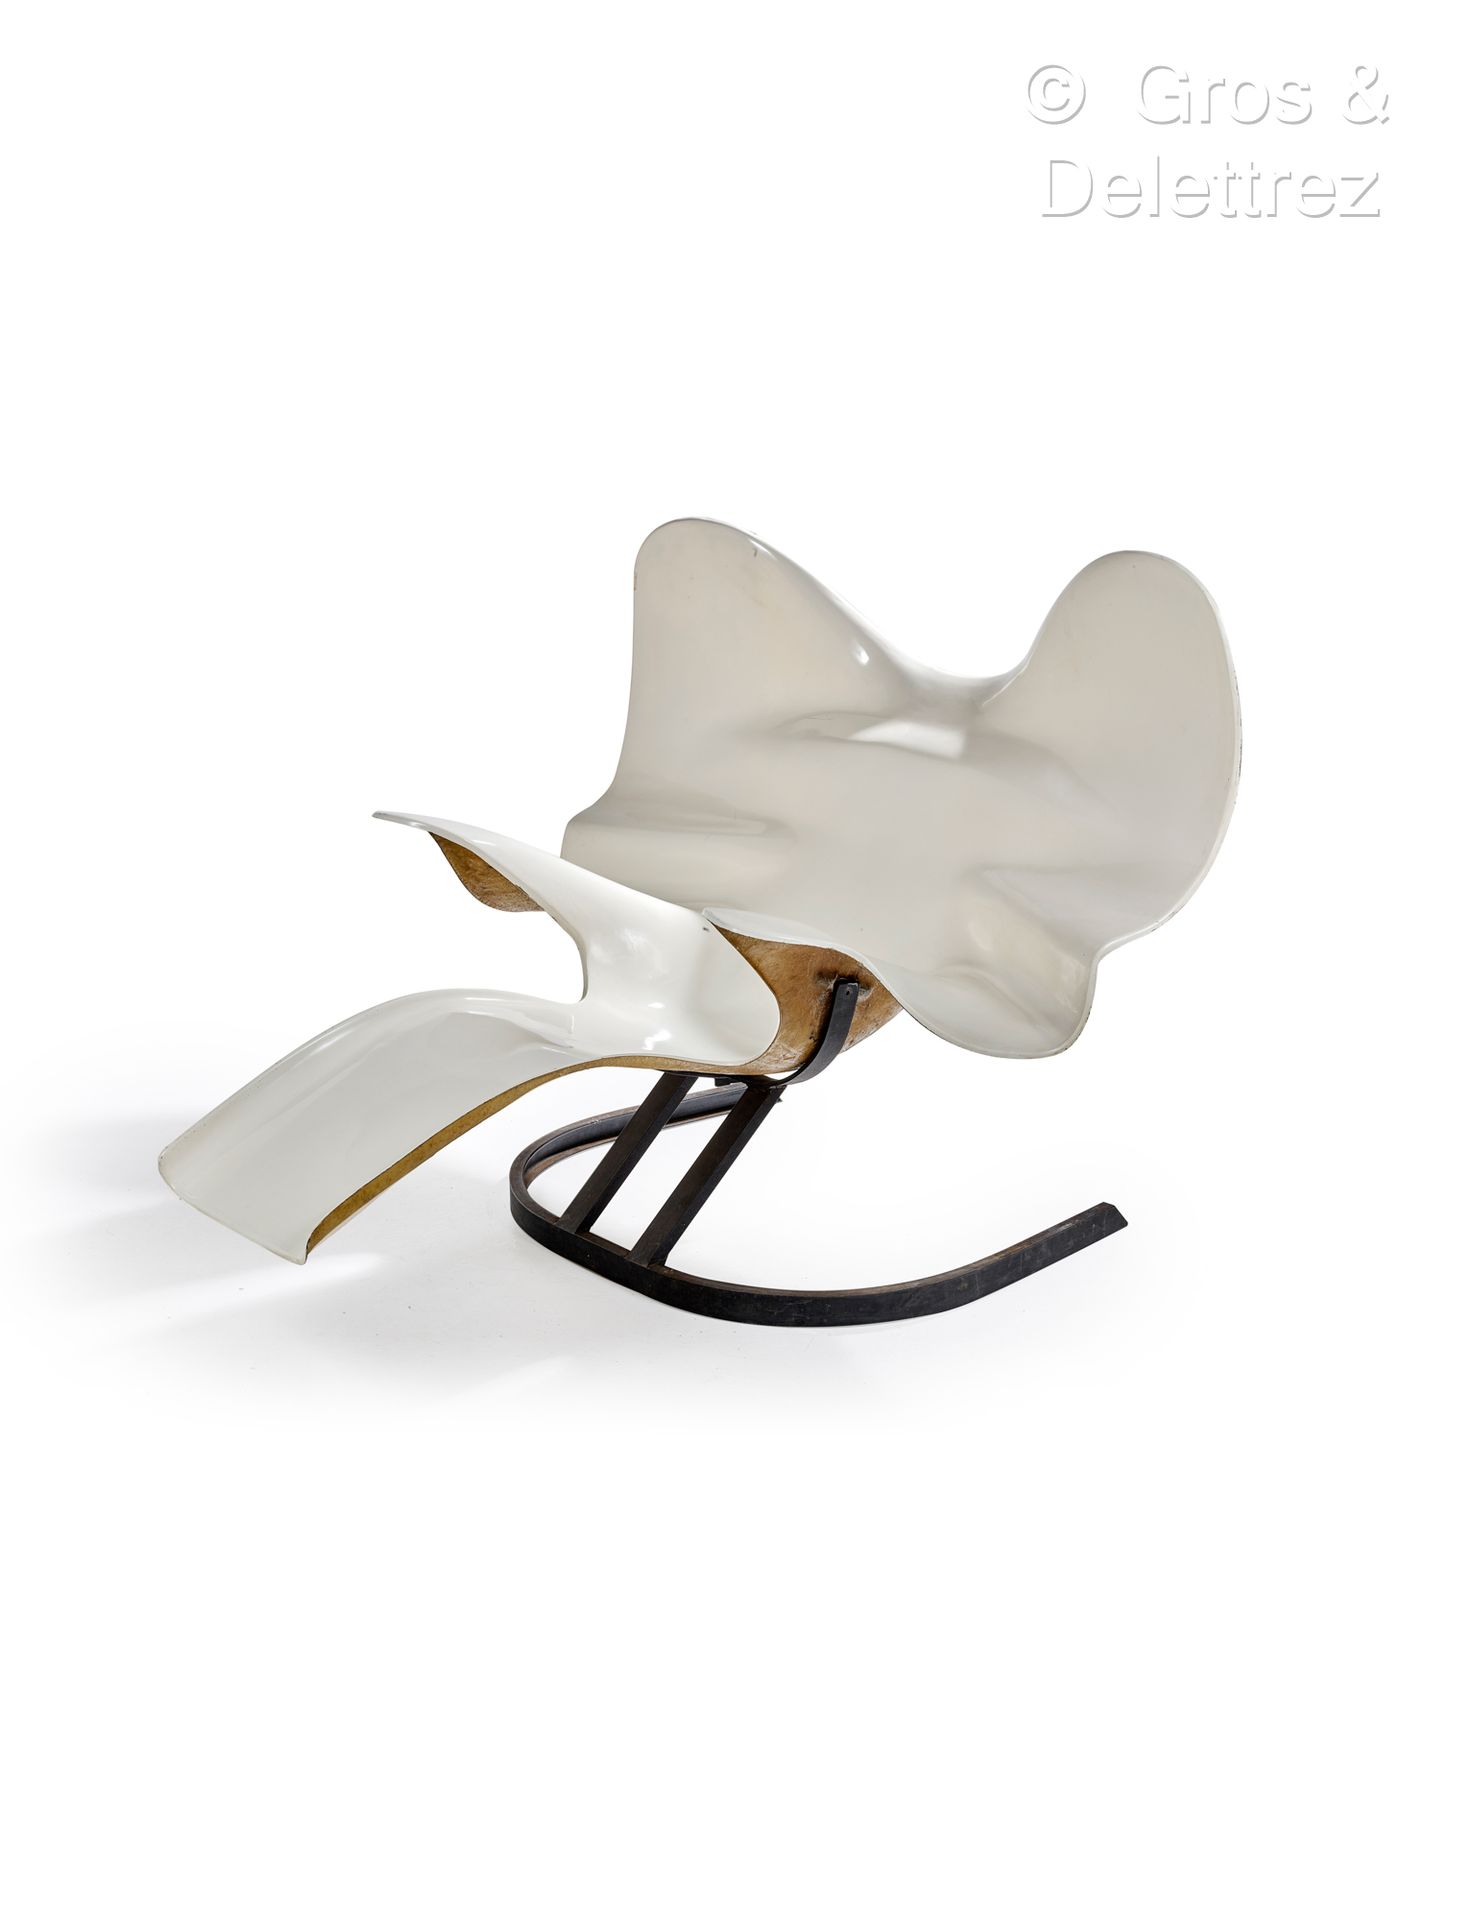 Null Bernard RANCILLAC (1931-2021)
Fauteuil modèle « Elephant chair » en fibres &hellip;